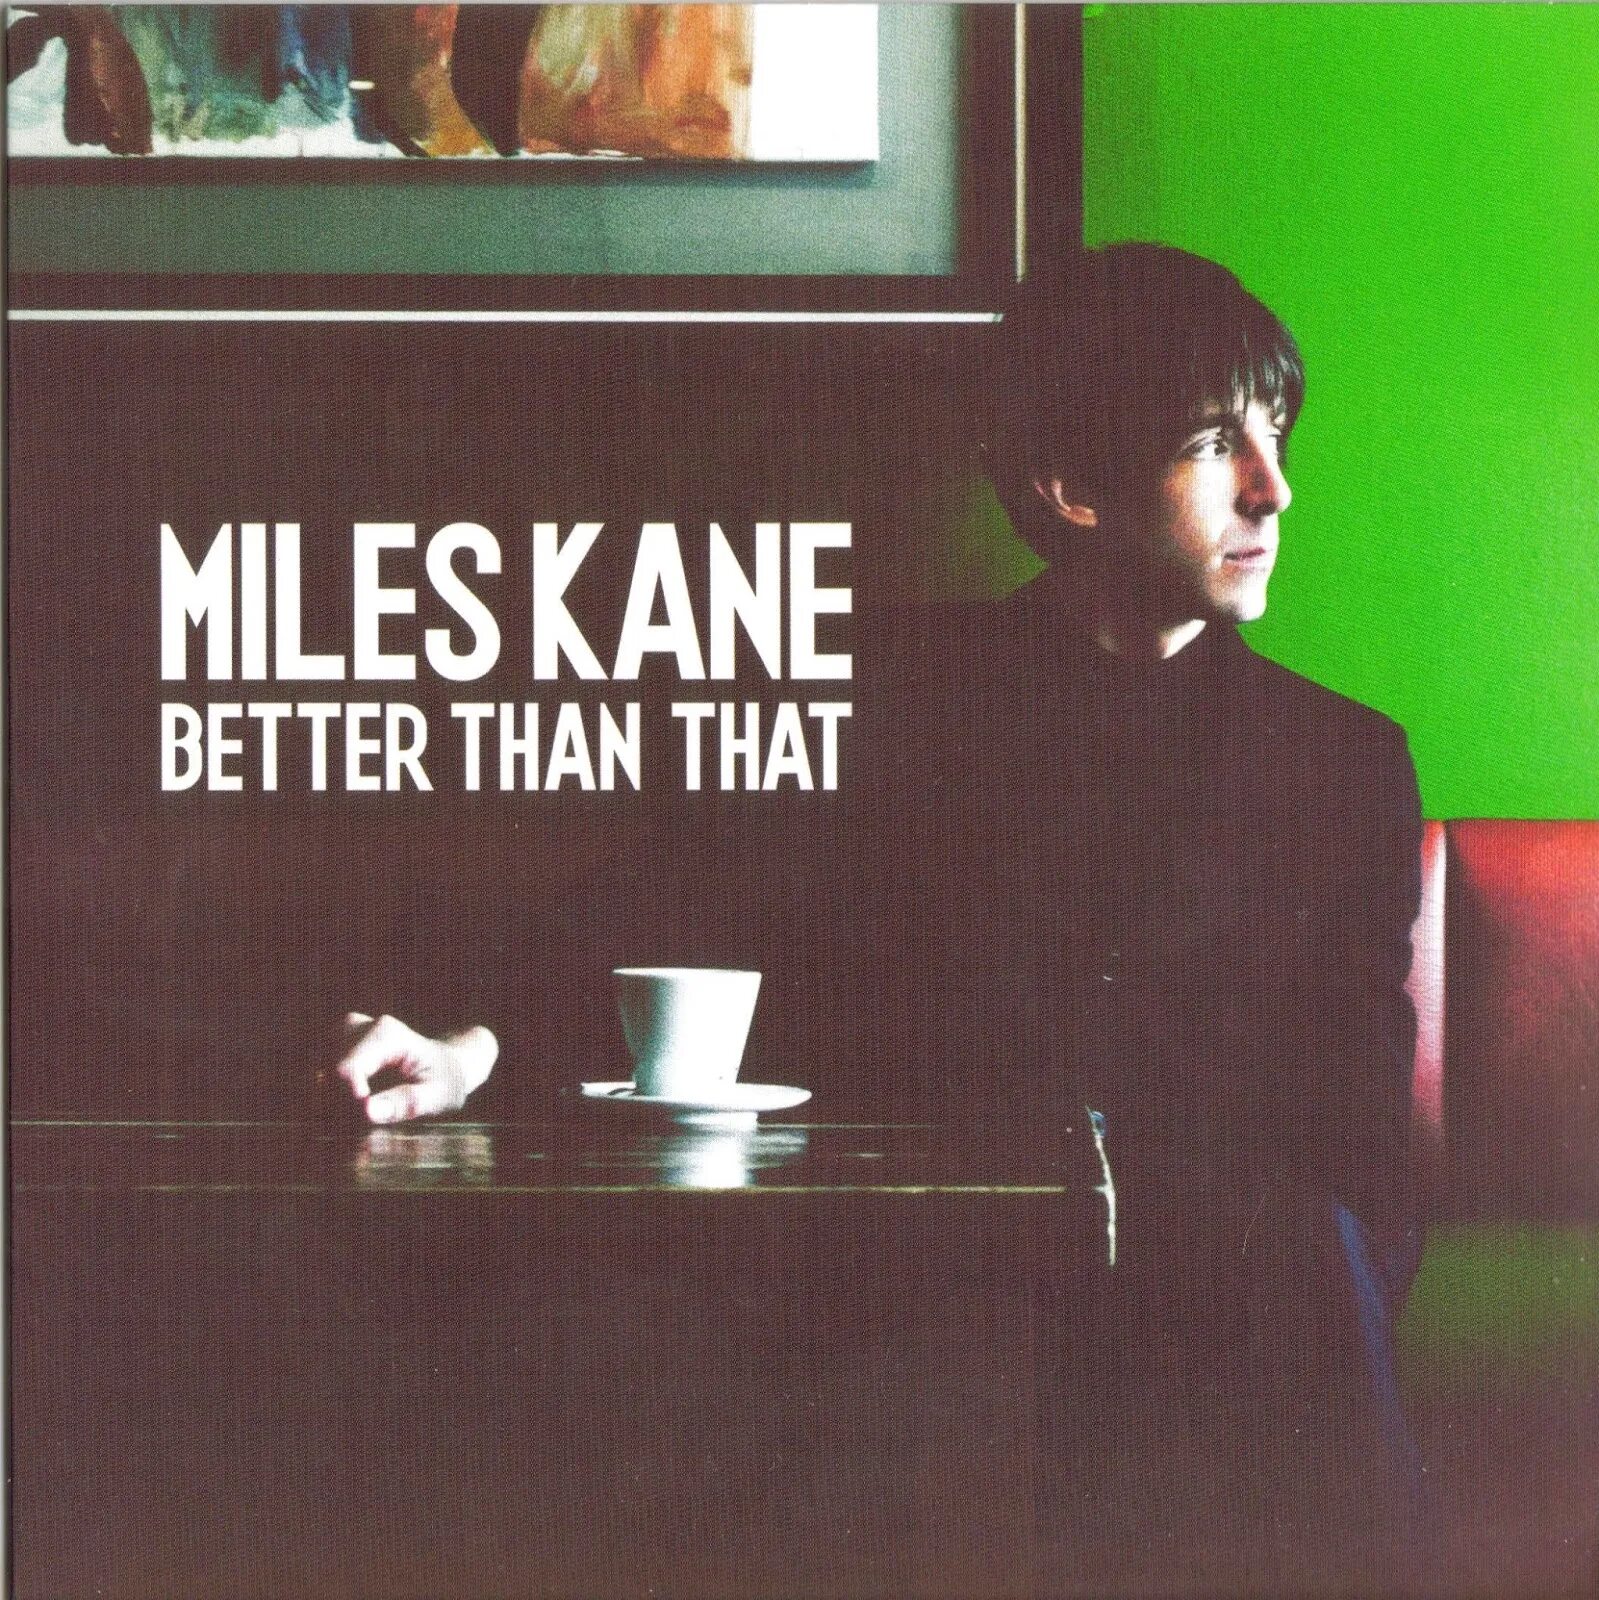 Miles Kane 2013. Майлз Кейн альбом. Blossoms, Miles Kane. Miles Kane LP. Слово miles